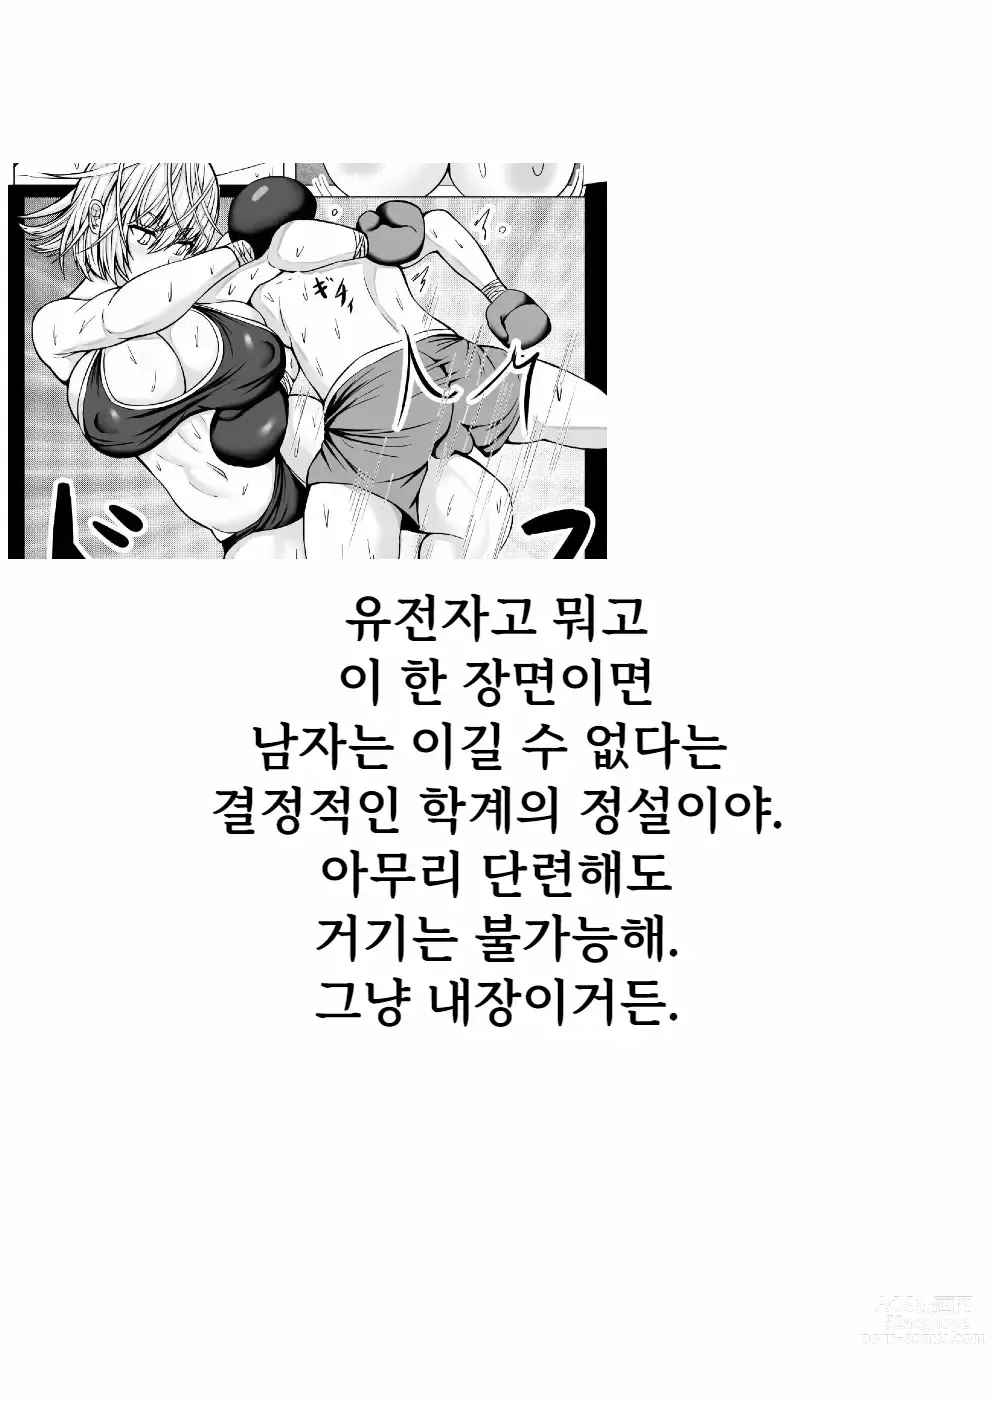 Page 63 of doujinshi 에로패배